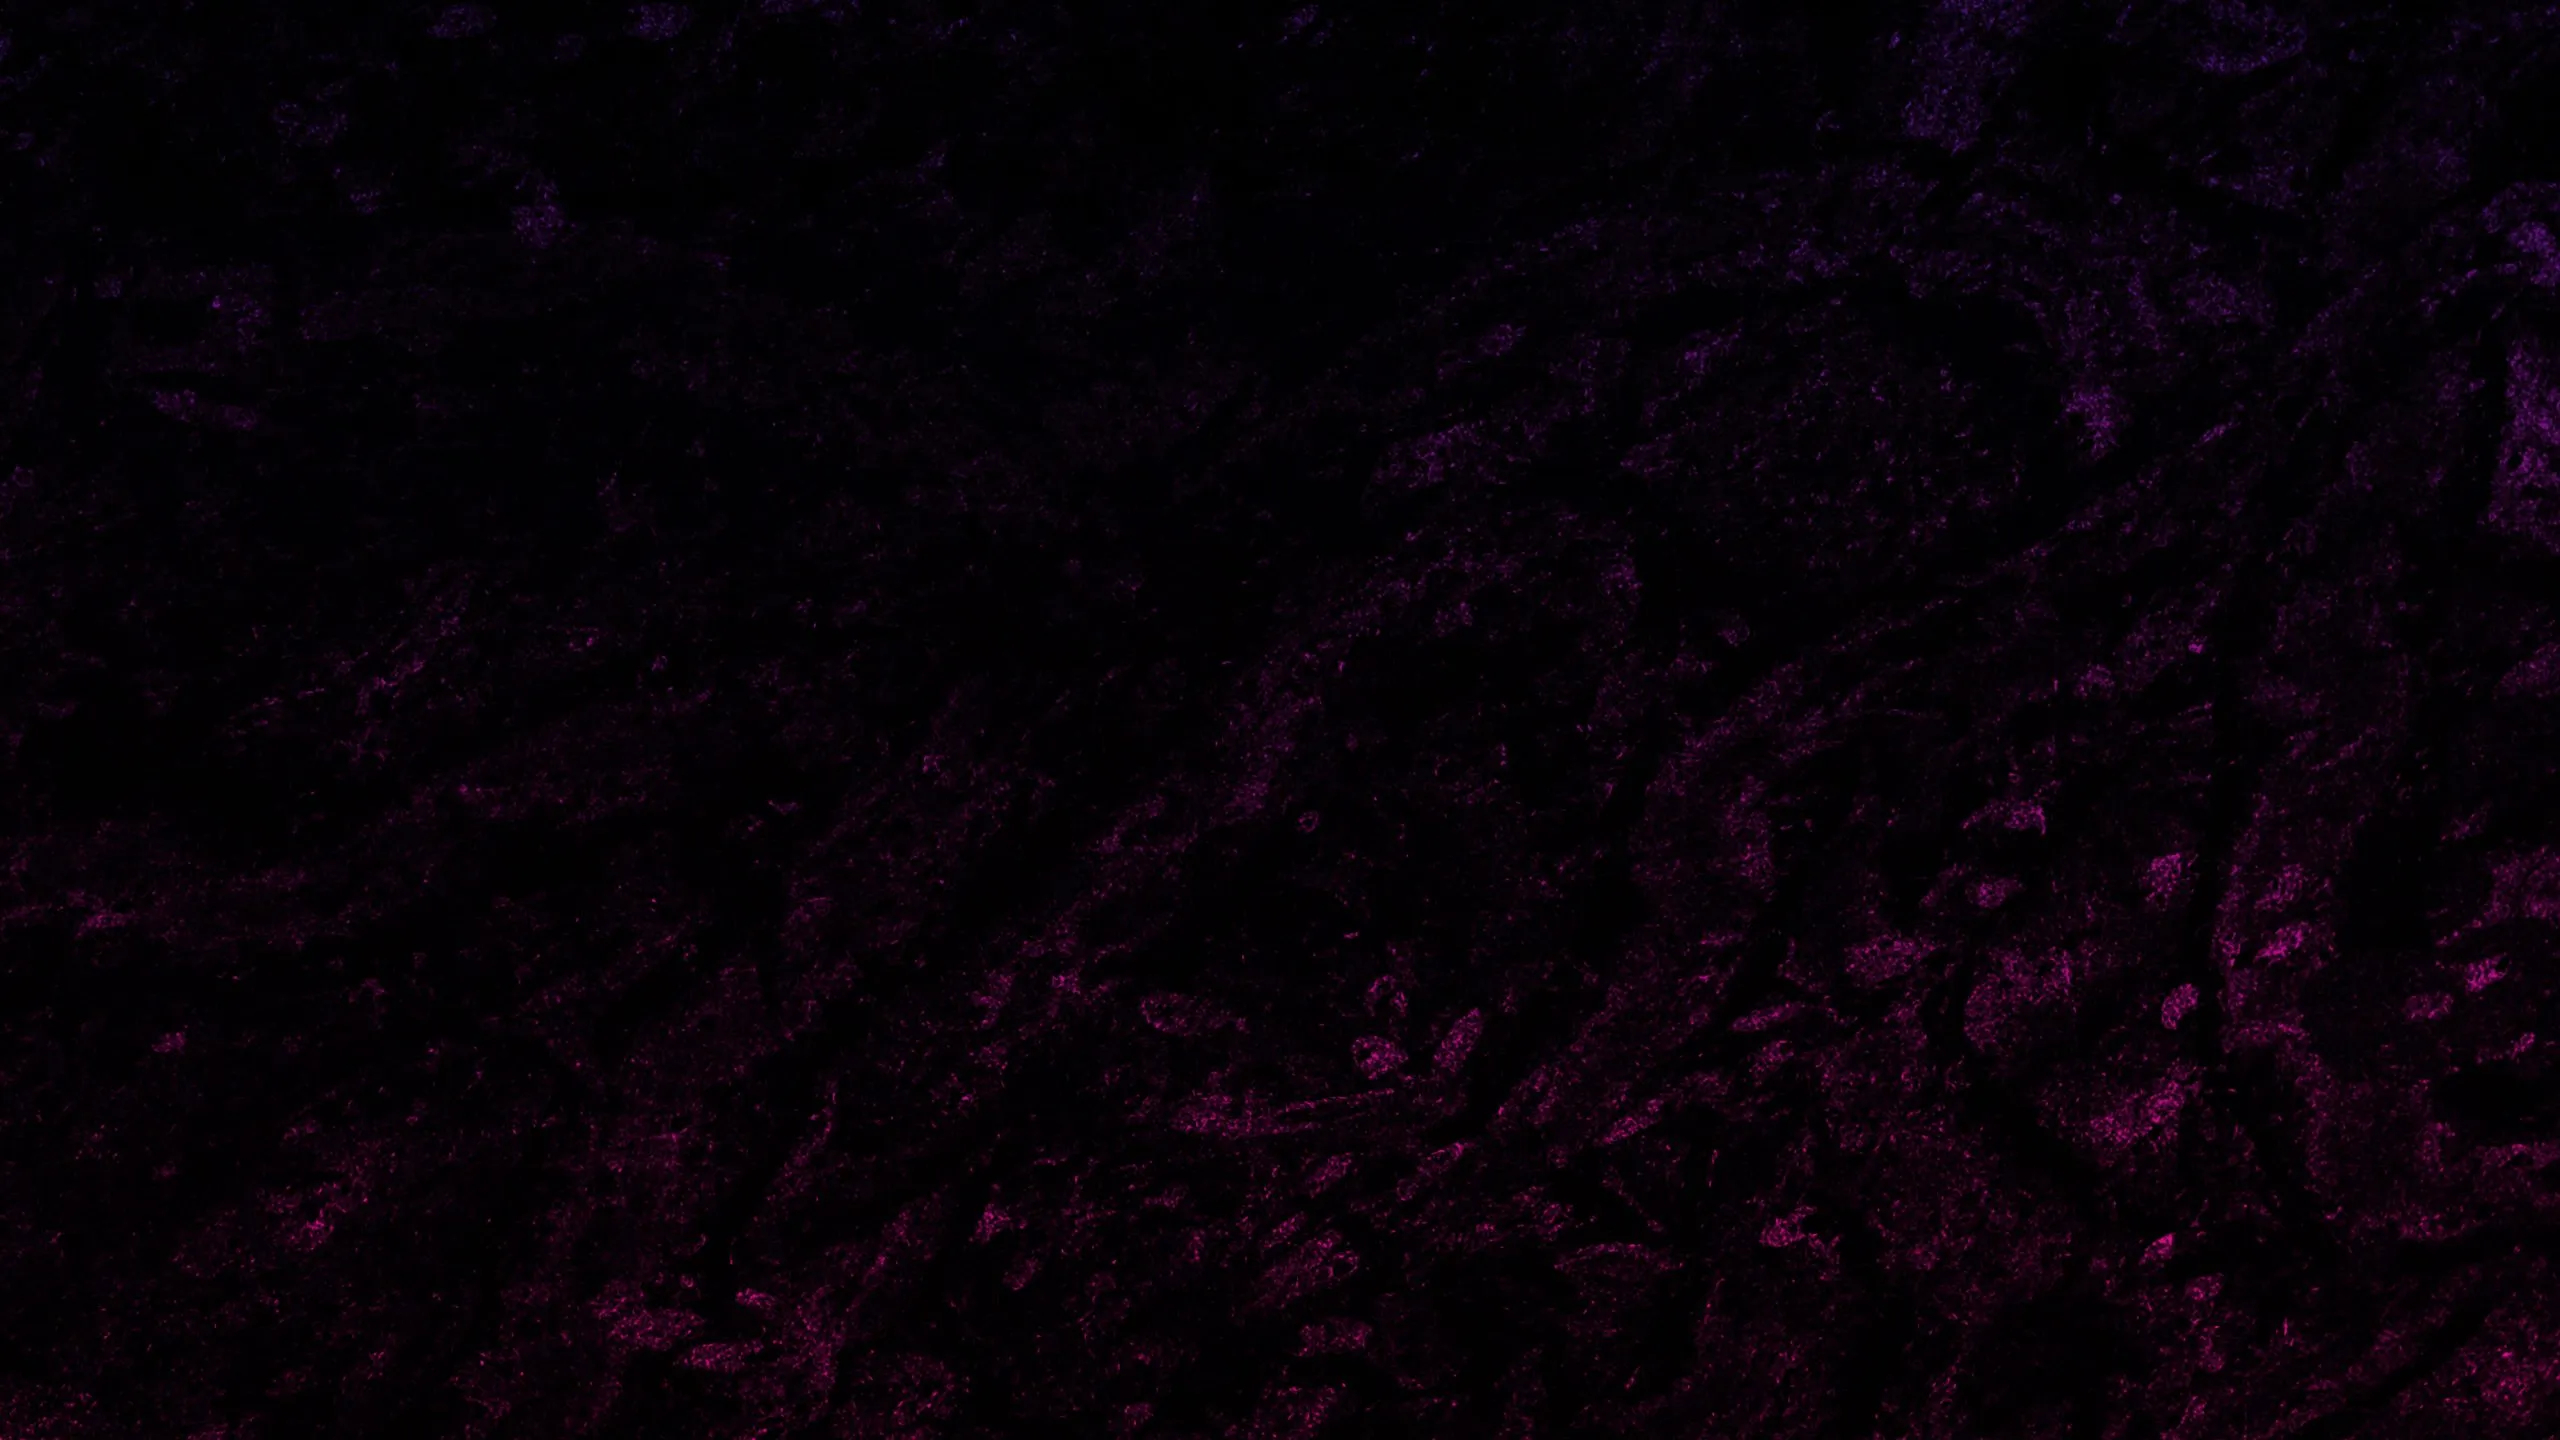 2560x1440 Purple and black texture wallpaper Free Image by Inderpreet kaur